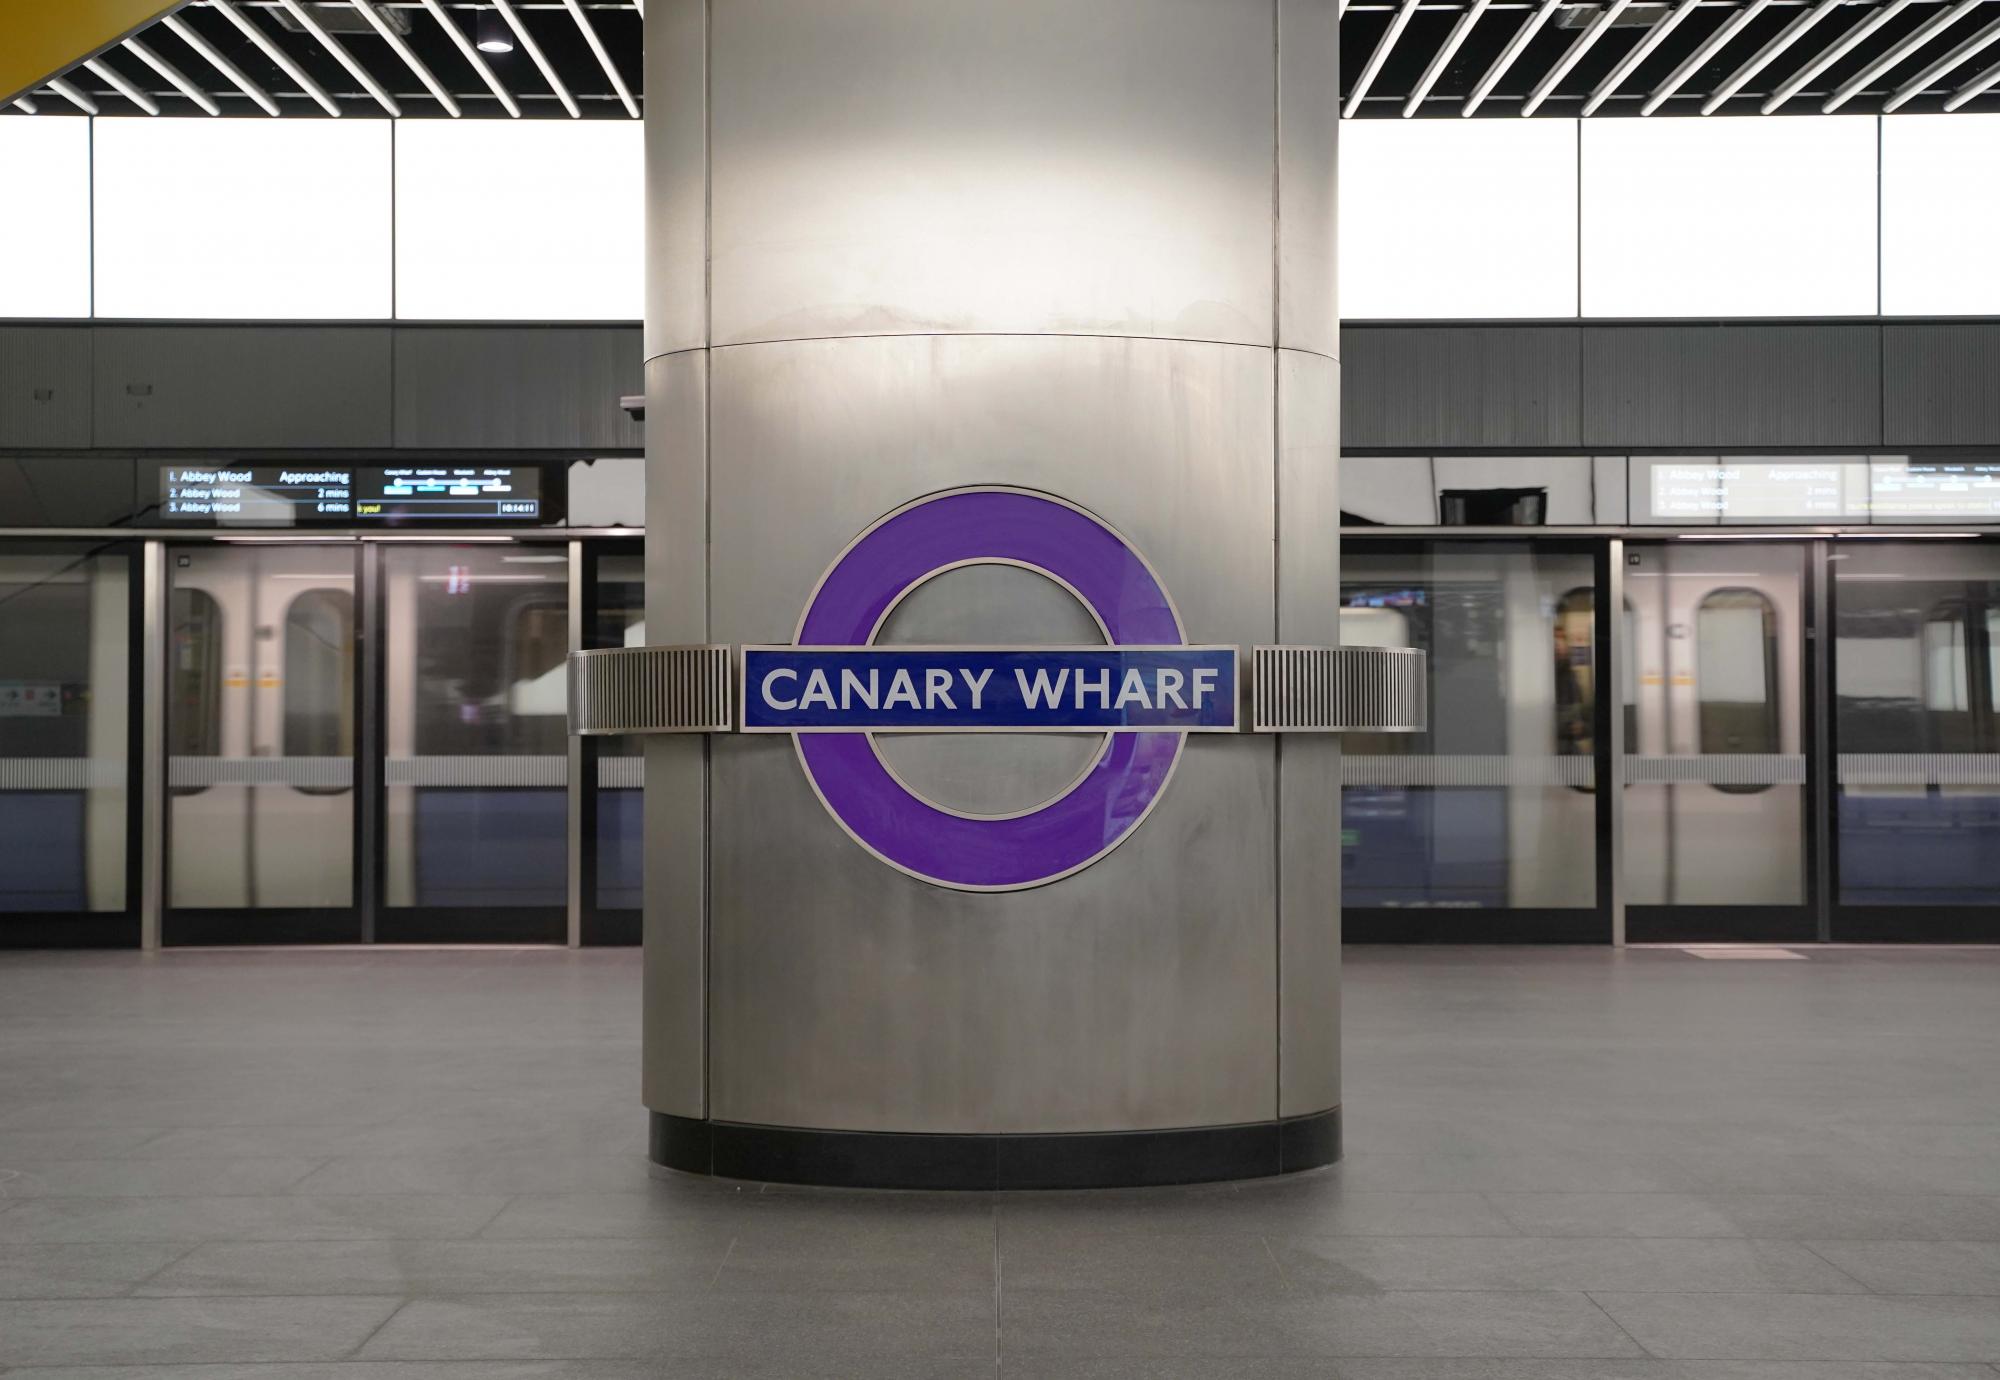 Canary Wharf station on the Elizabeth line